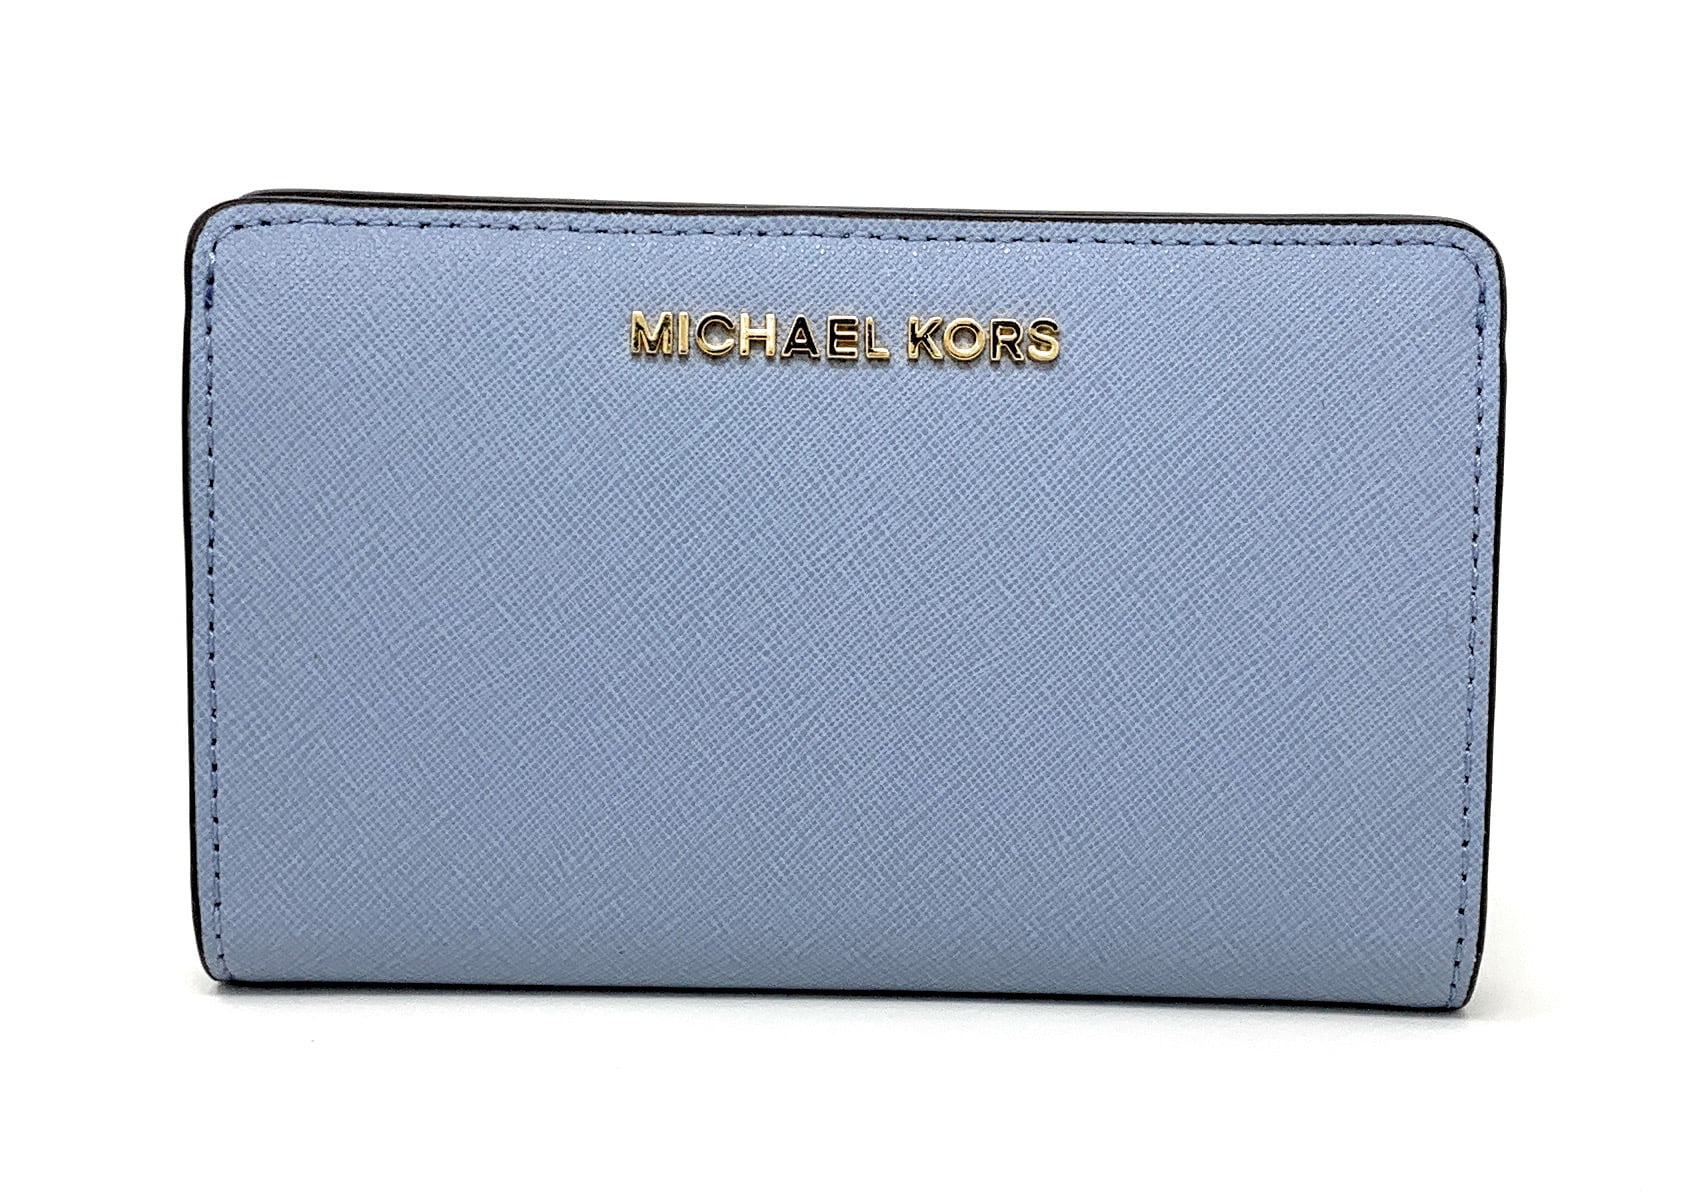 Michael Kors Jet Set Travel Slim Bifold Saffinao Leather Wallet, Pale Blue  